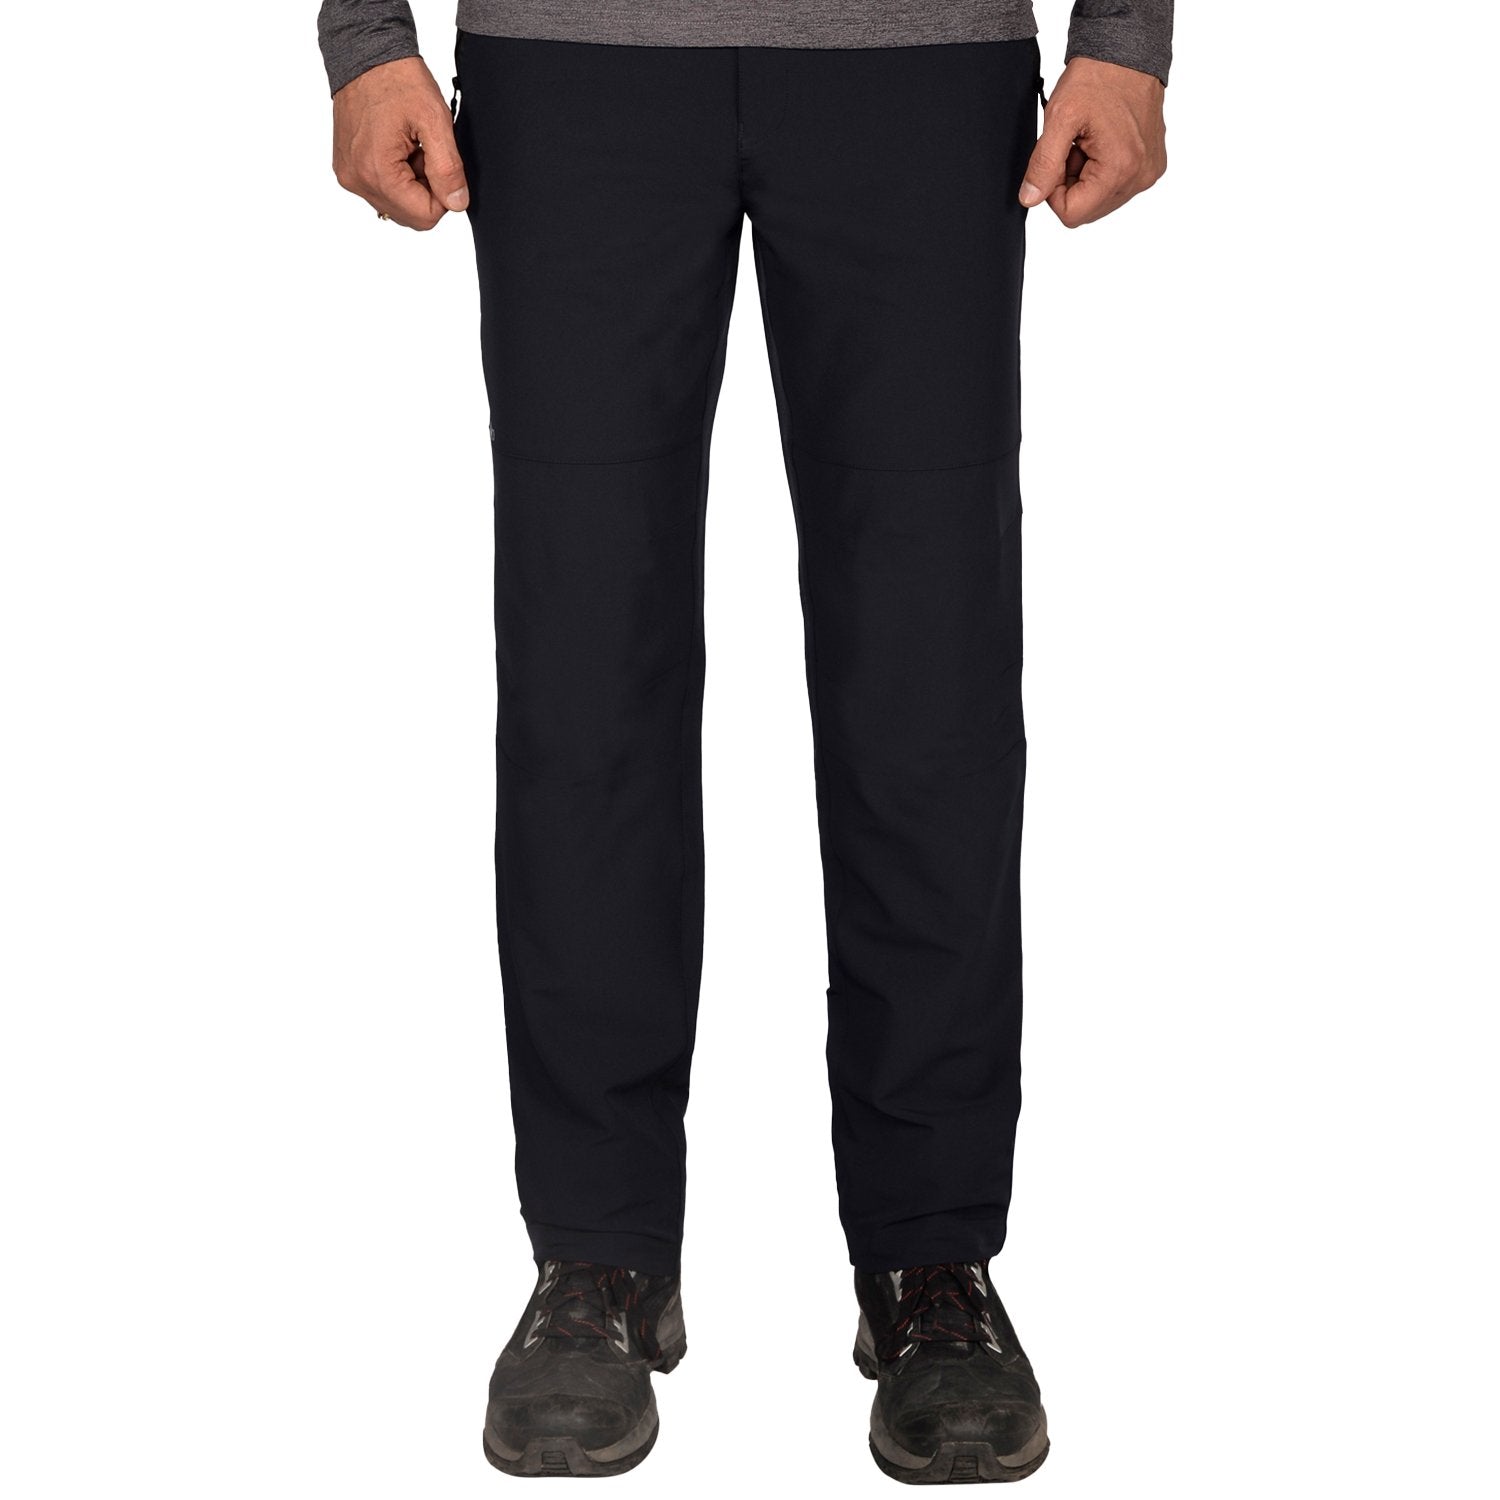 Buy Munnar All Weather Trekking Pants Black at Gokyo Outdoor Clothing & Gear